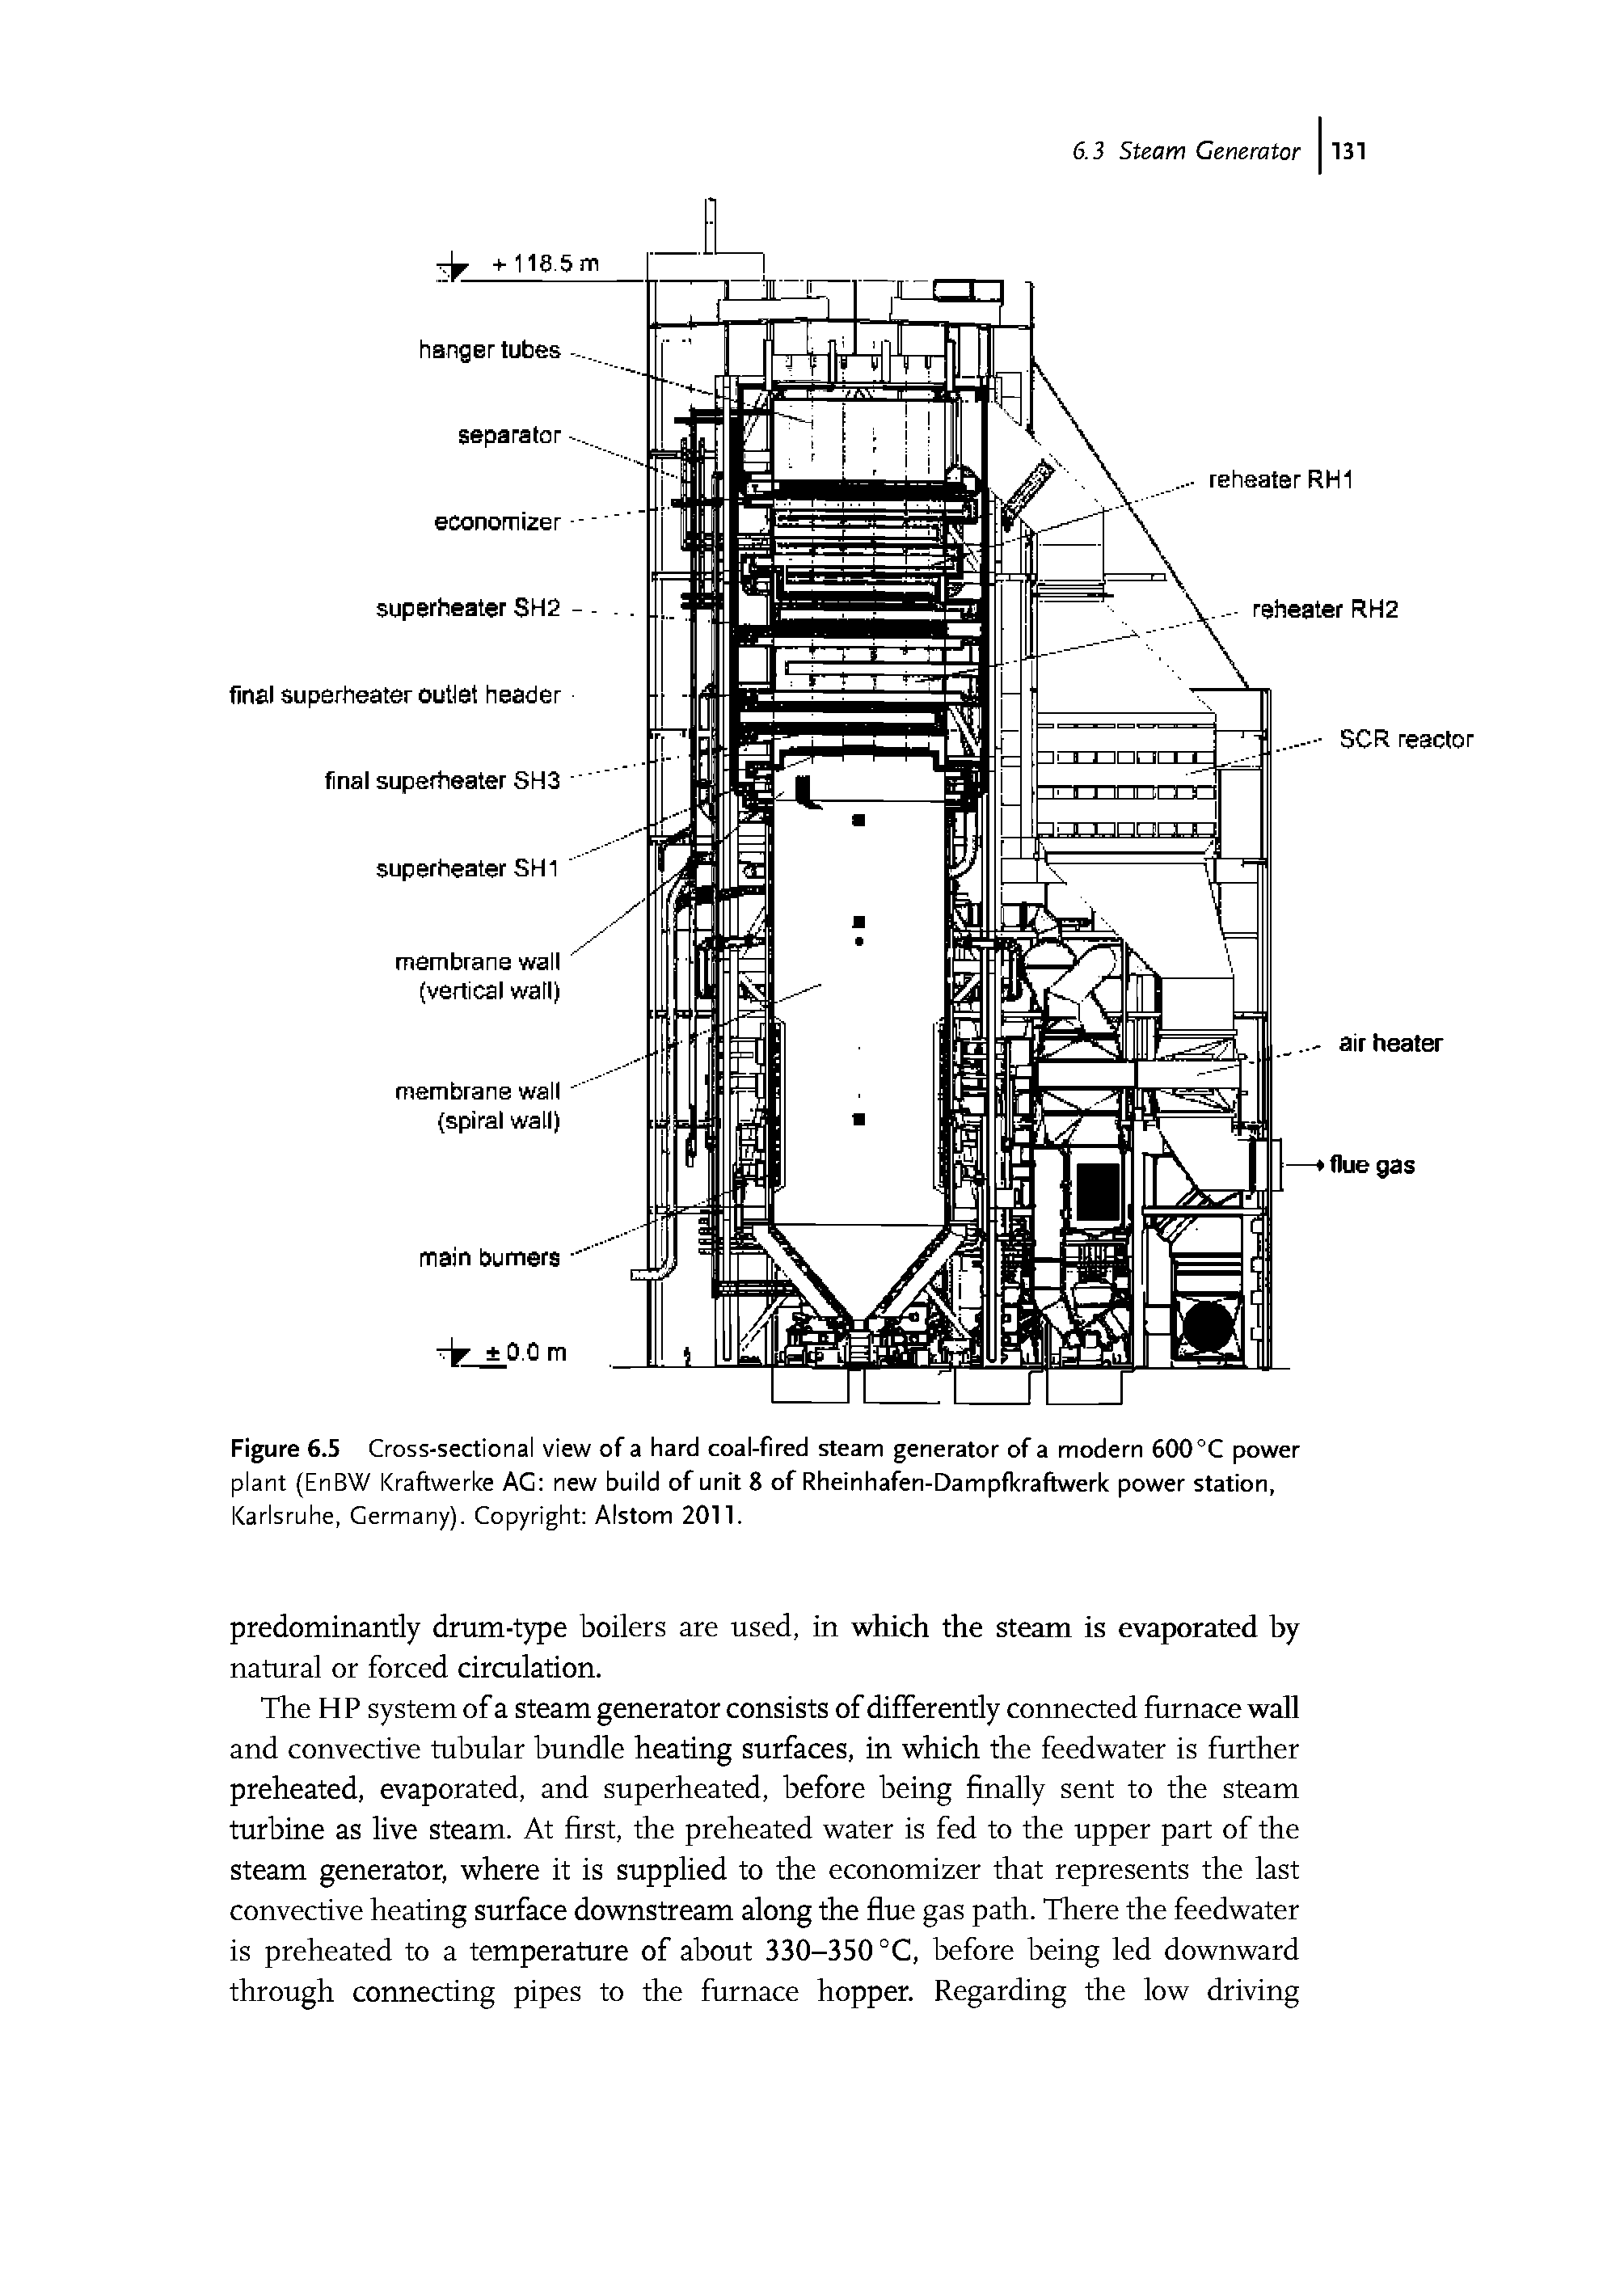 Figure 6.5 Cross-sectional view of a hard coal-fired steam generator of a modern 600 °C power plant (EnBW Kraftwerke AC new build of unit 8 of Rheinhafen-Dampfkraftwerk power station,...